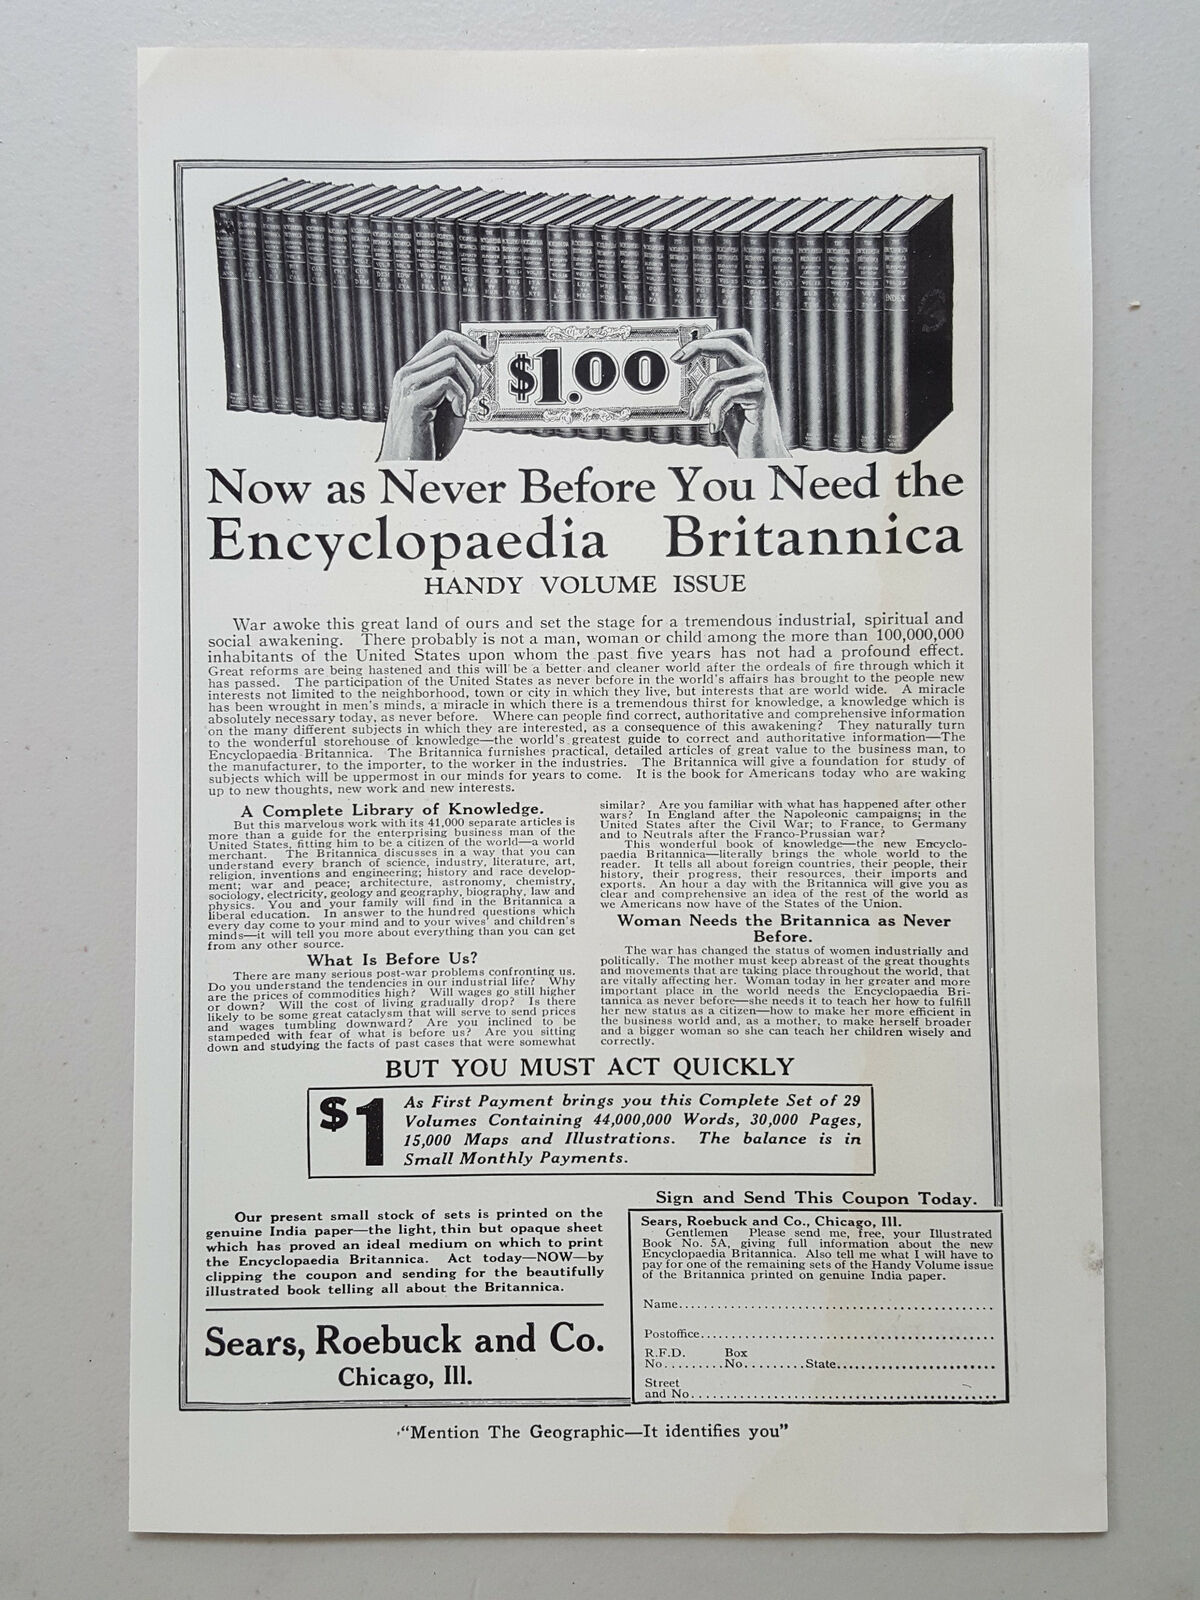 1919 Sears, Roebuck Encyclopaedia Britannica Coupon Vintage Magazine Print Ad